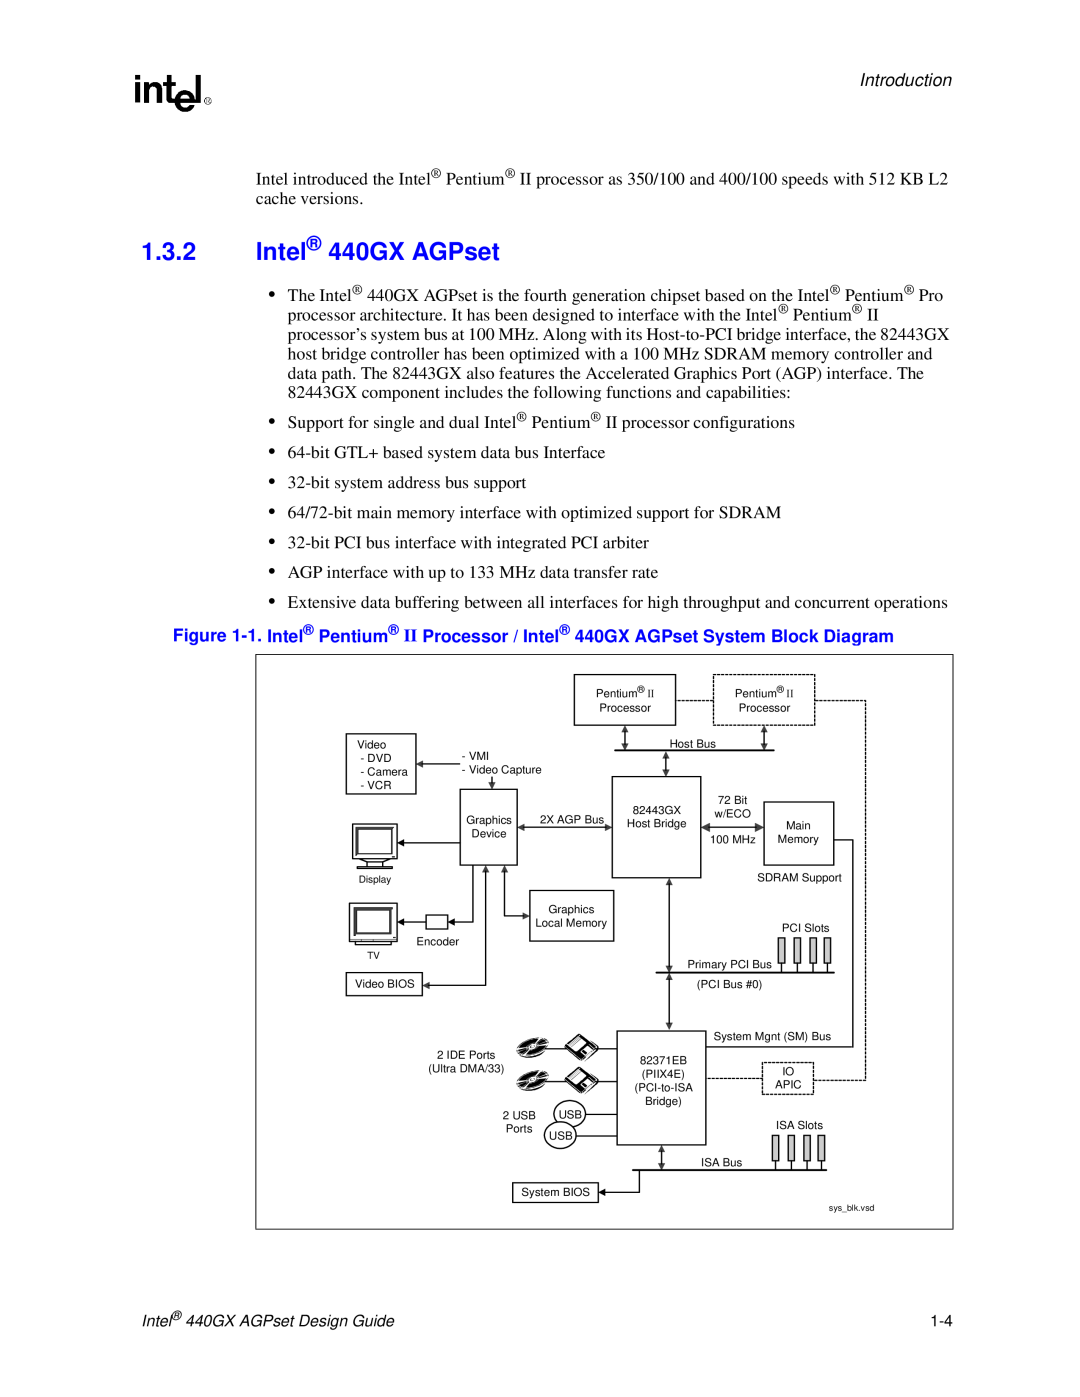 Intel manual Intel 440GX AGPset, Introduction 